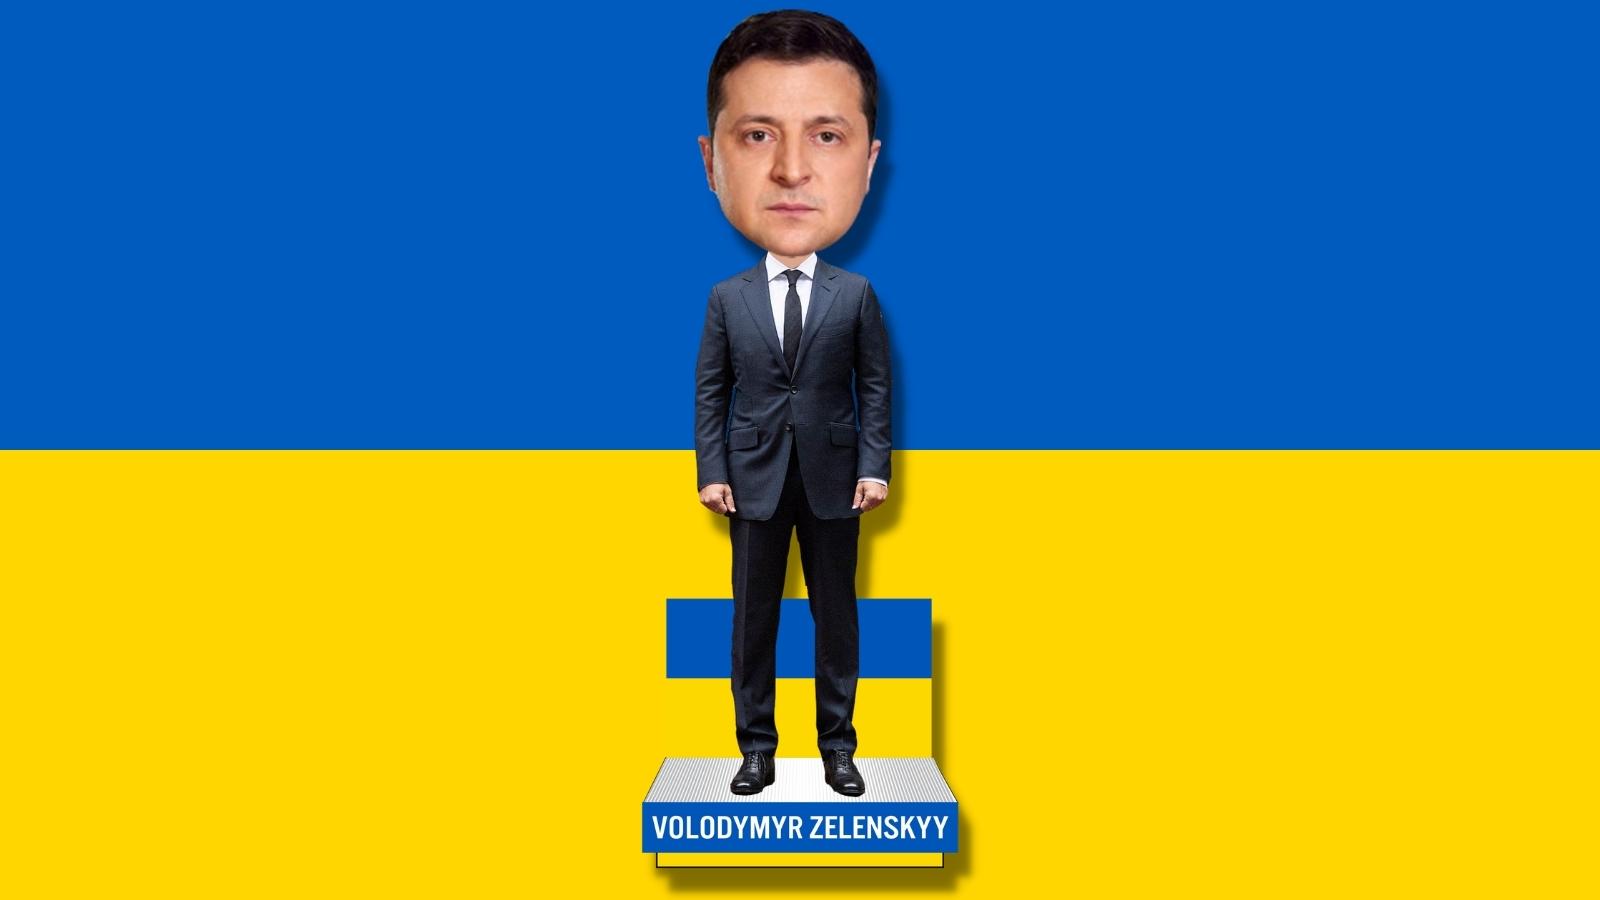 Bobblehead of Ukrainian President Zelenskyy will support crisis relief fund